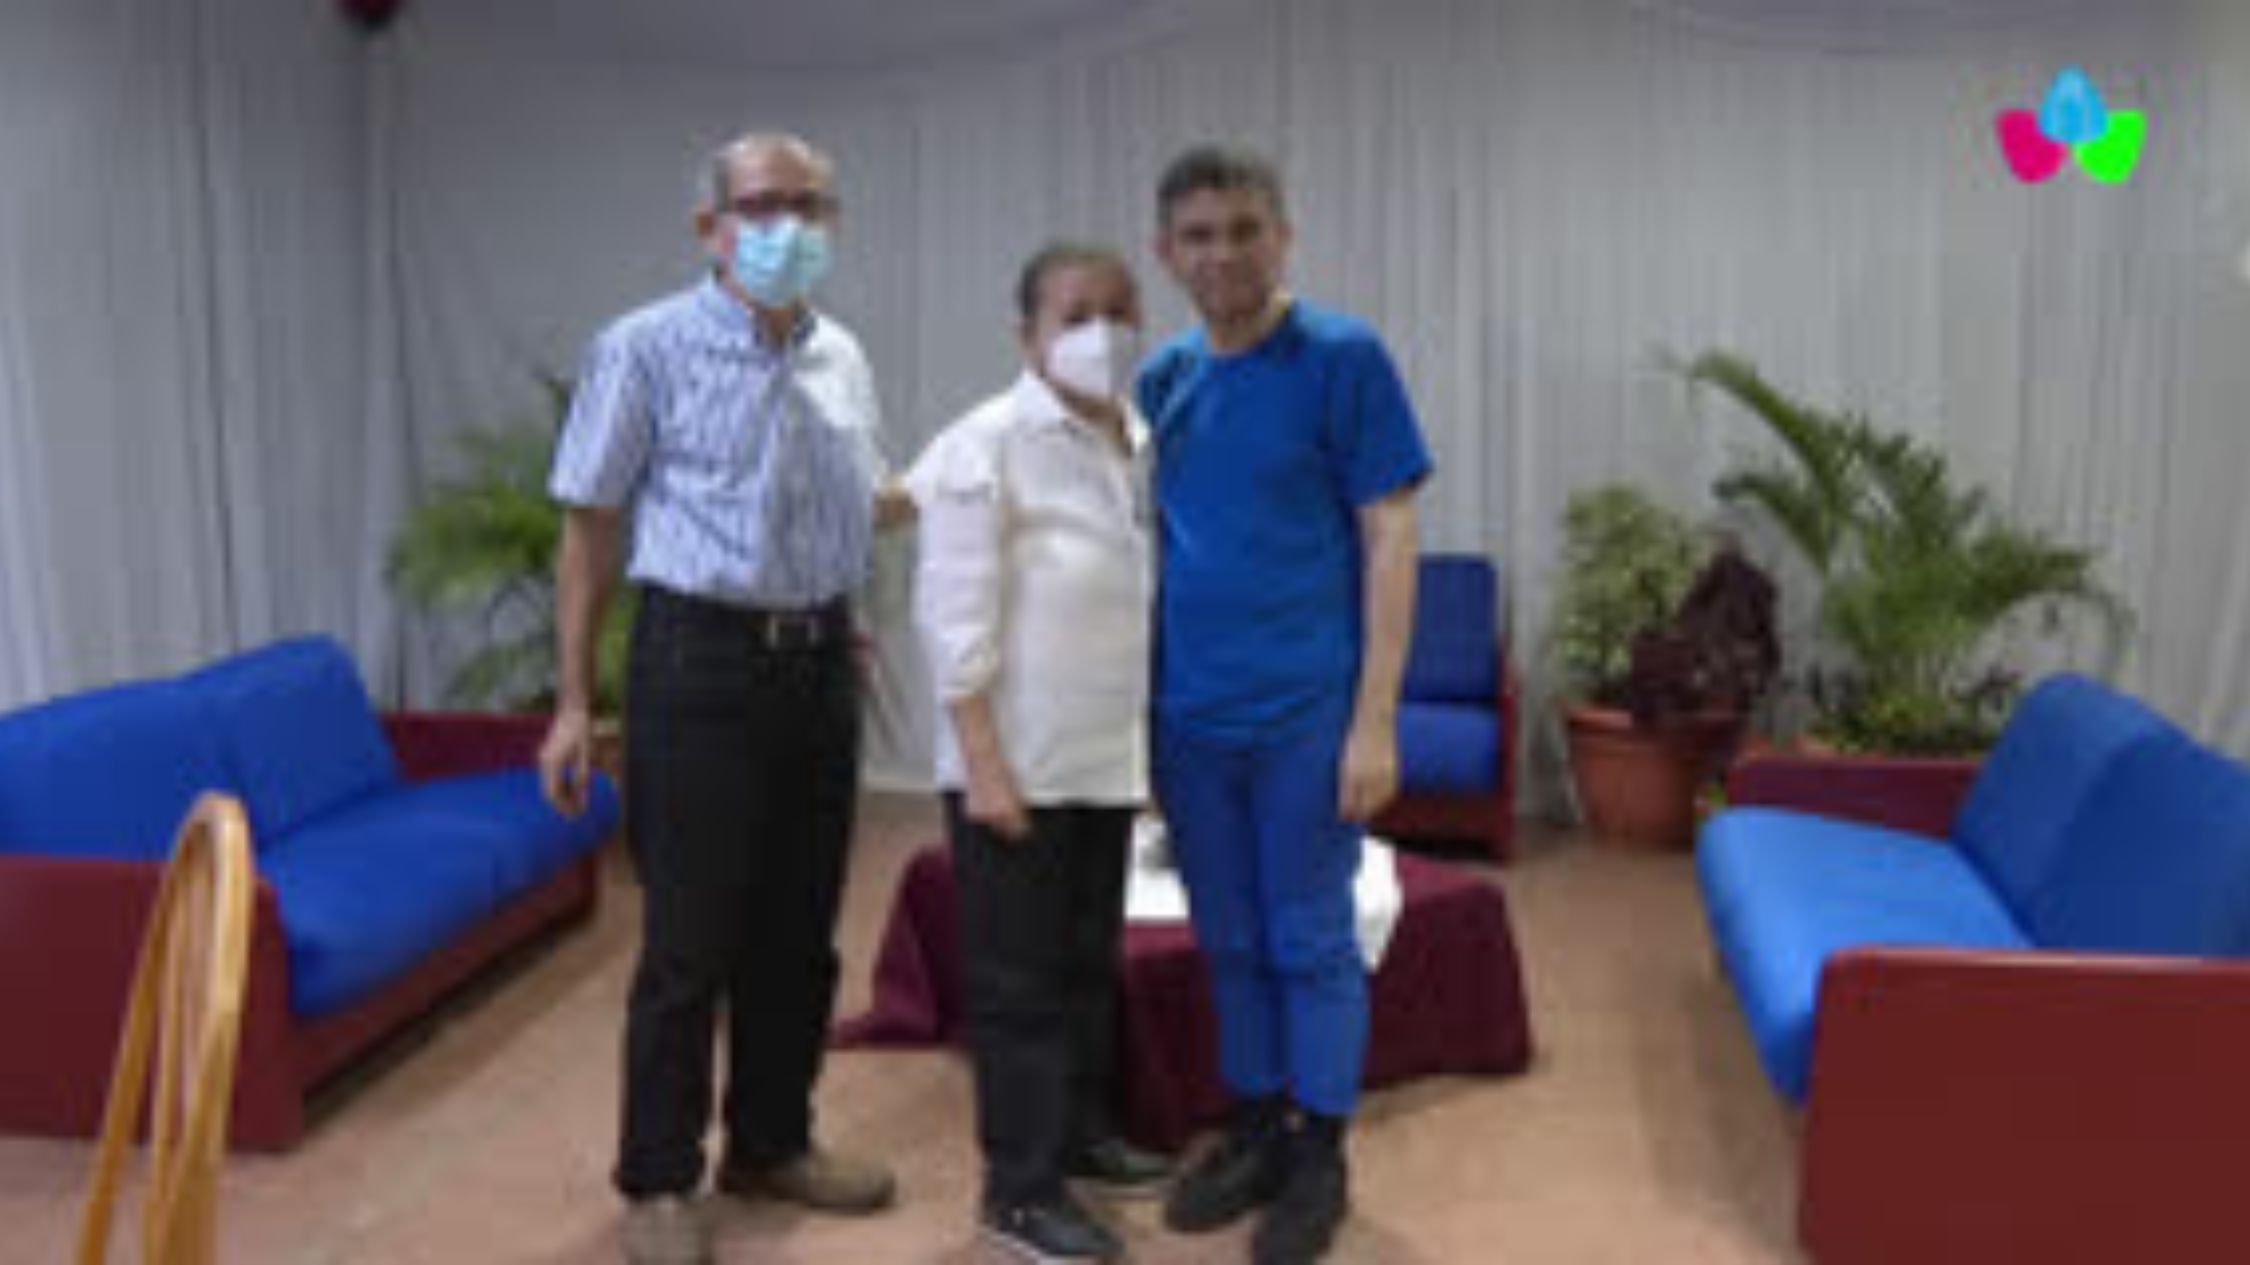 They broadcast in Nicaragua audiovisual material in which Monsignor Rolando Alvarez appears.